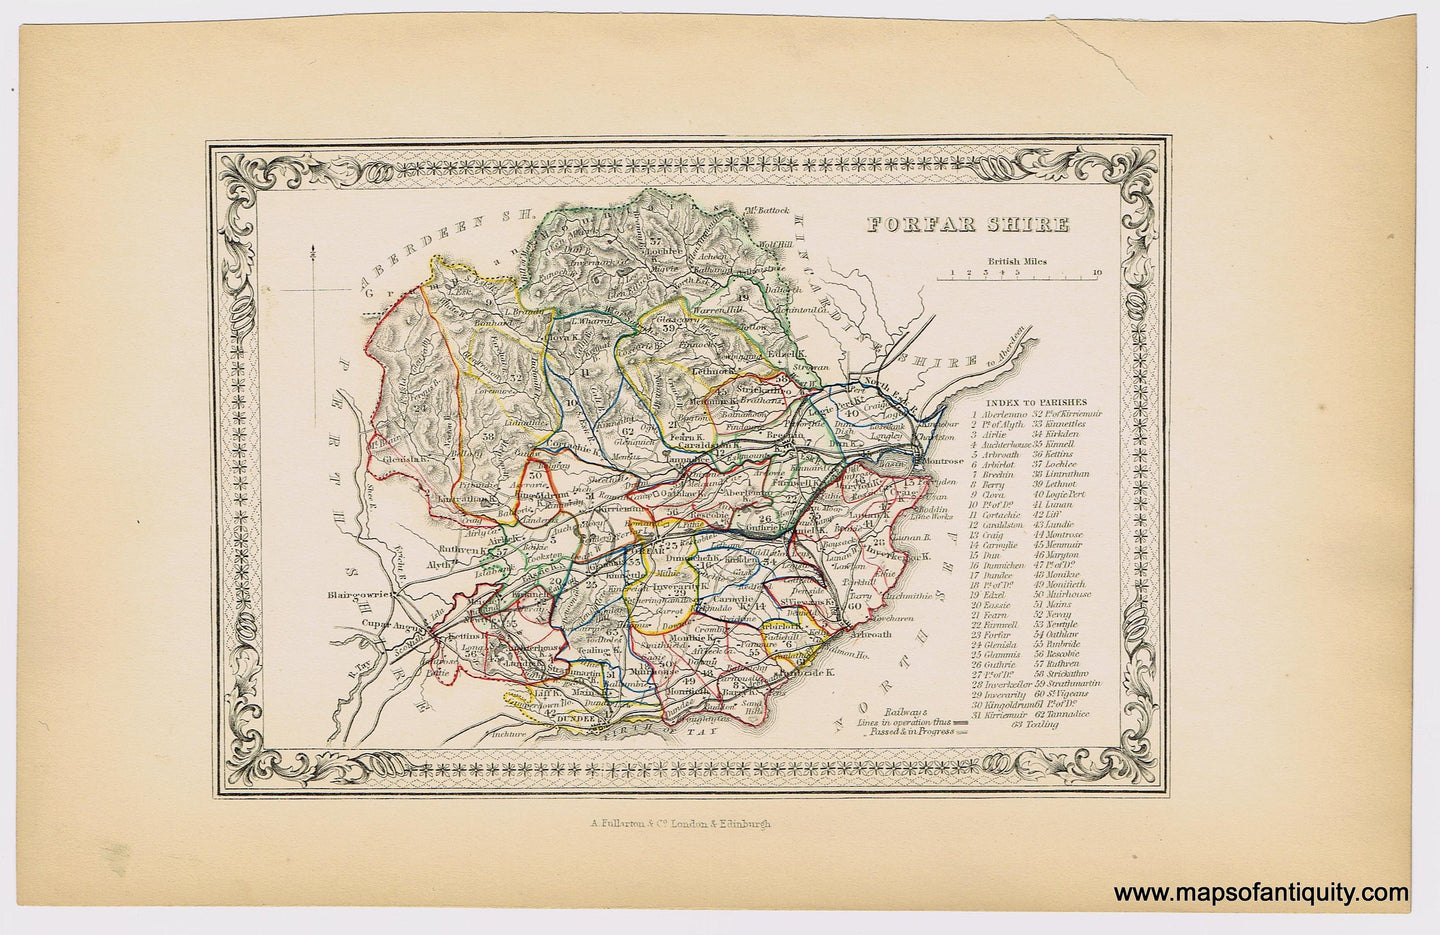 Genuine-Antique-Hand-colored-Map-Forfar-Shire-Scotland--1855-A-Fullarton-Co--Maps-Of-Antiquity